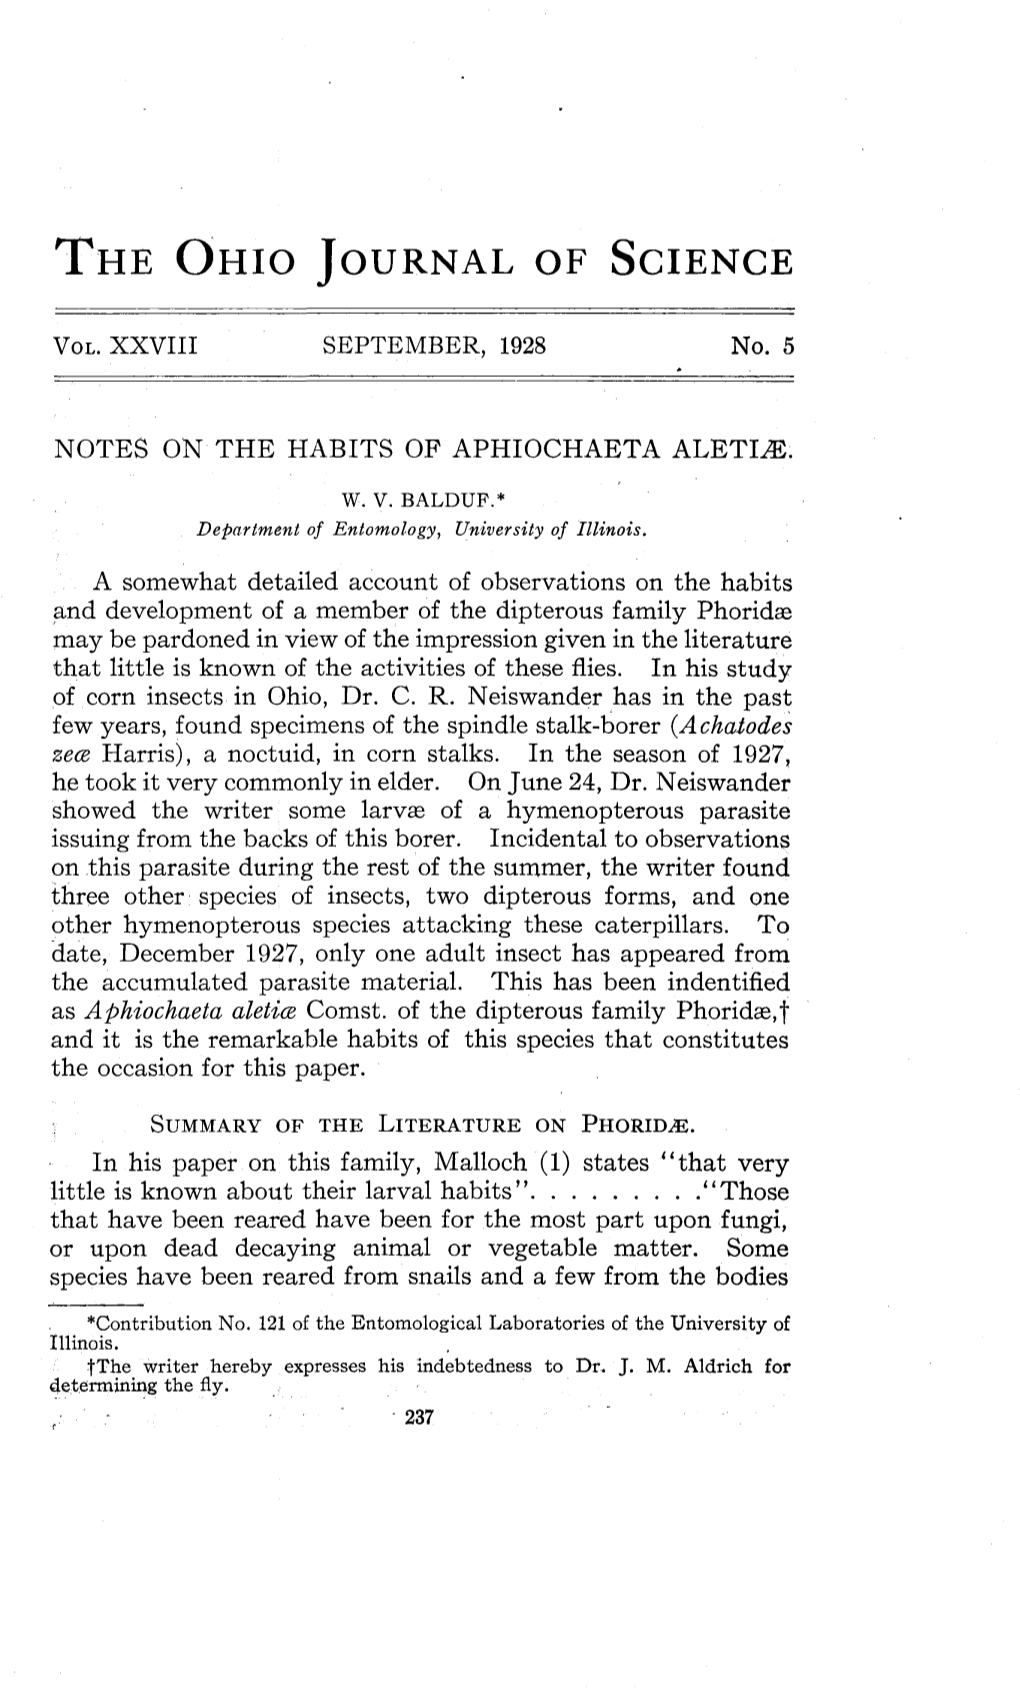 Notes on the Habits of Aphiochaeta Aletiae